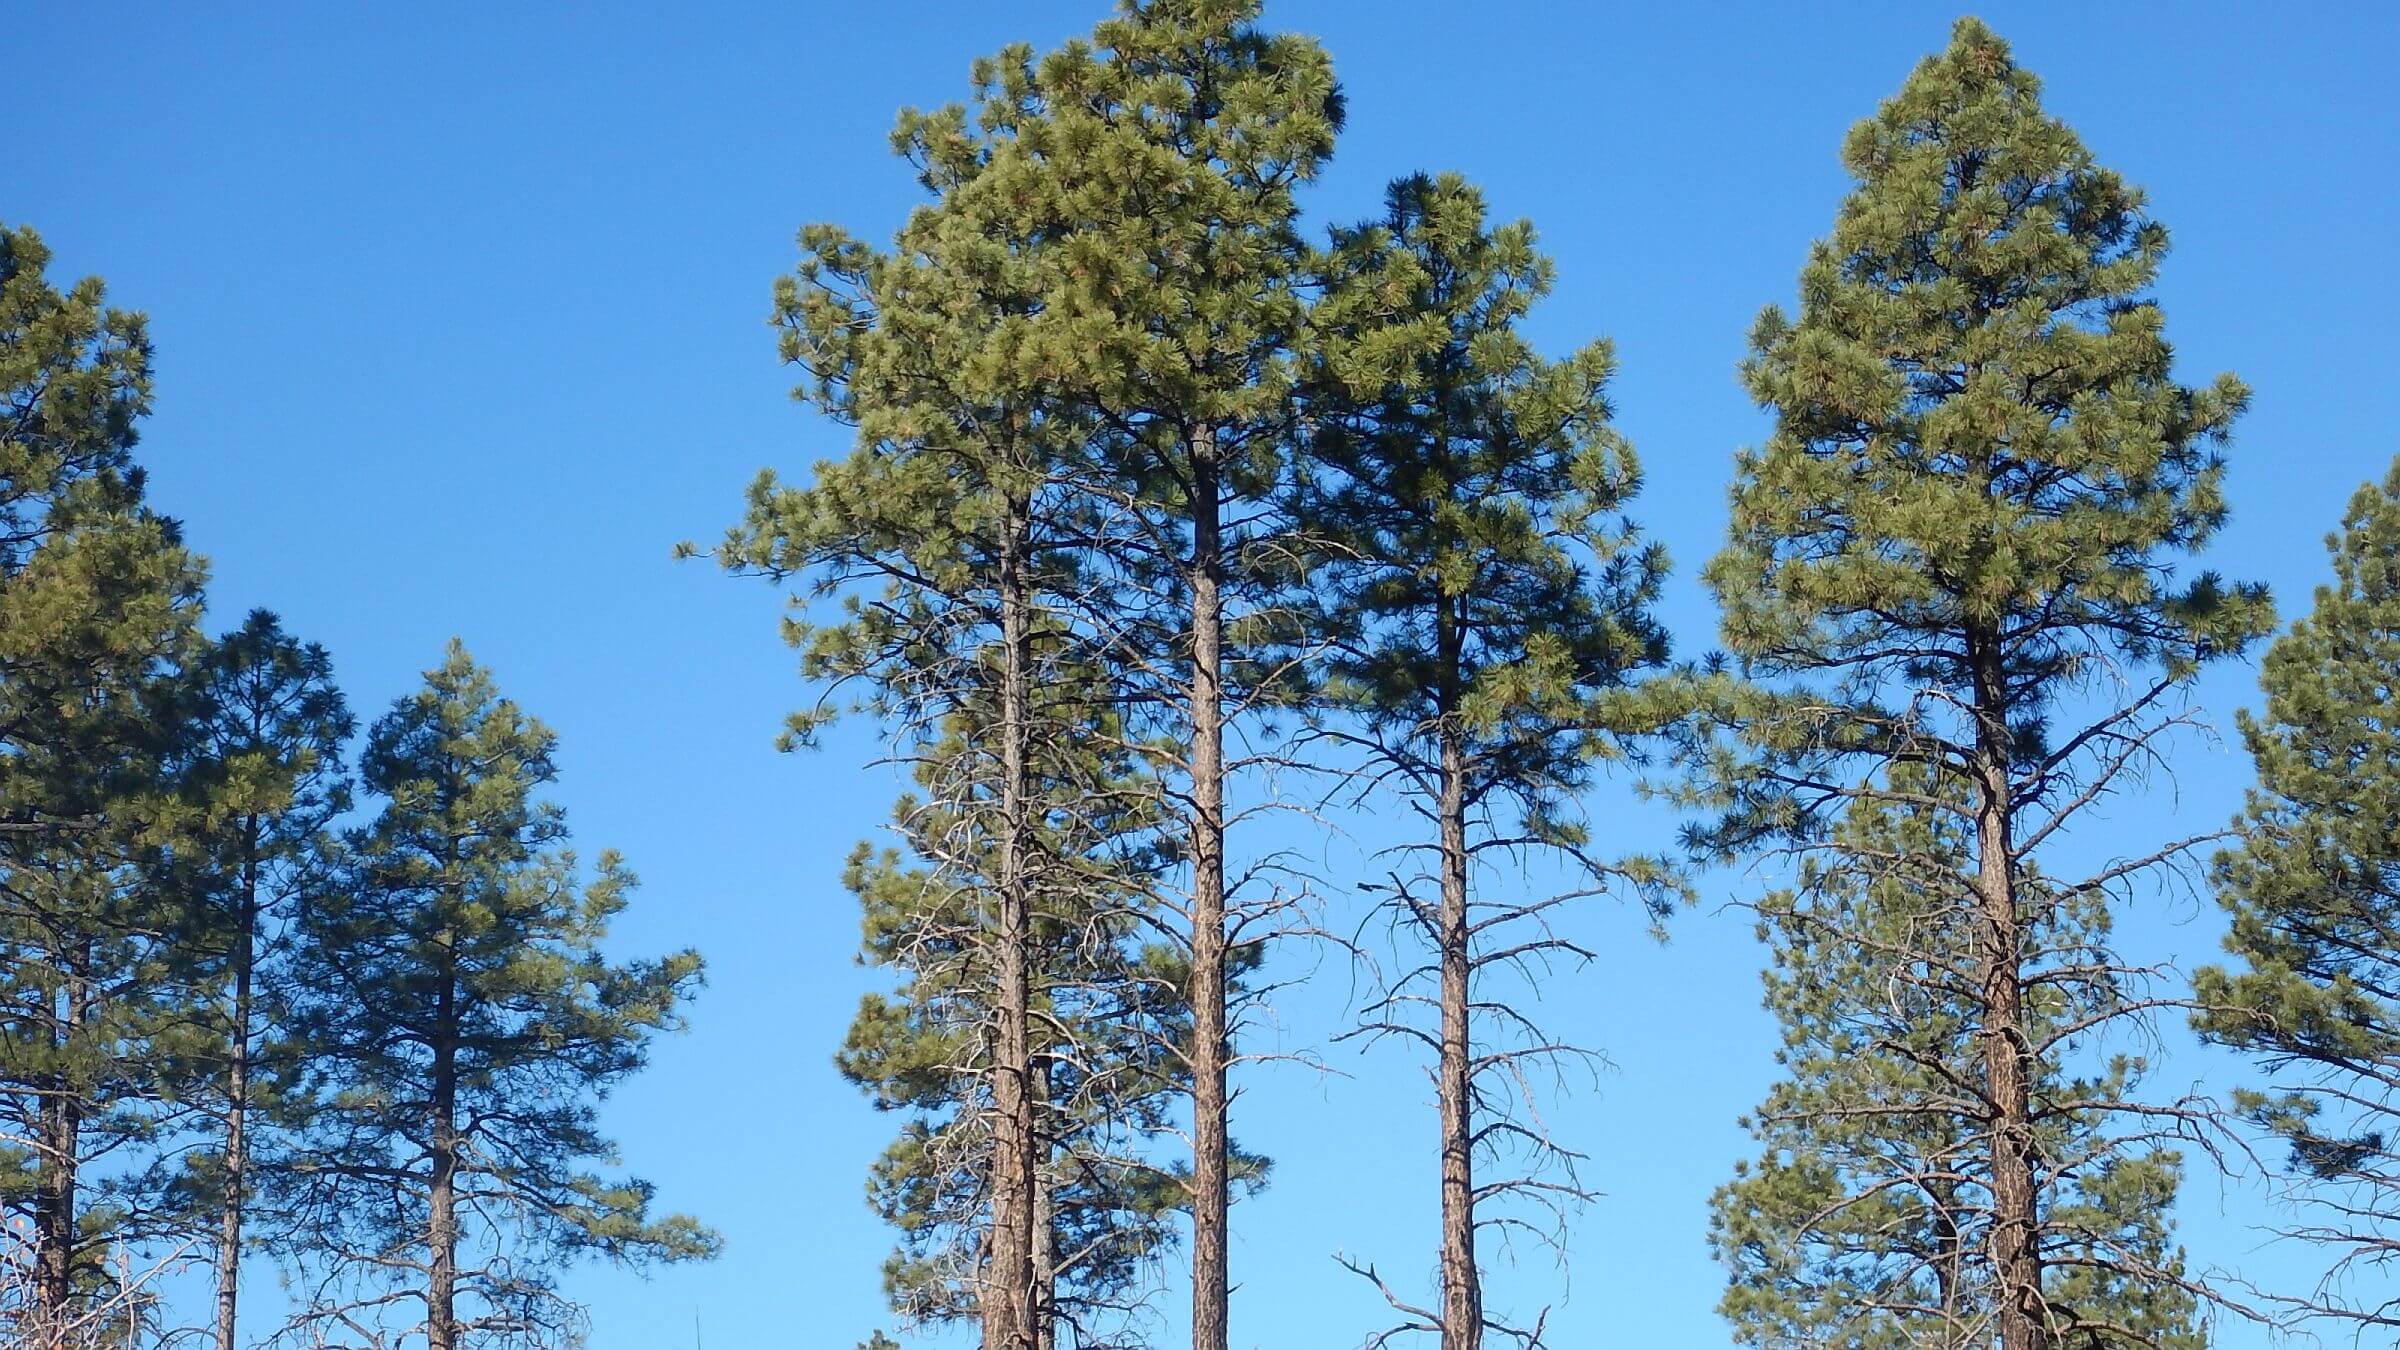 Zion Wilderness, Ponderosa pine (Pinus ponderosa), November